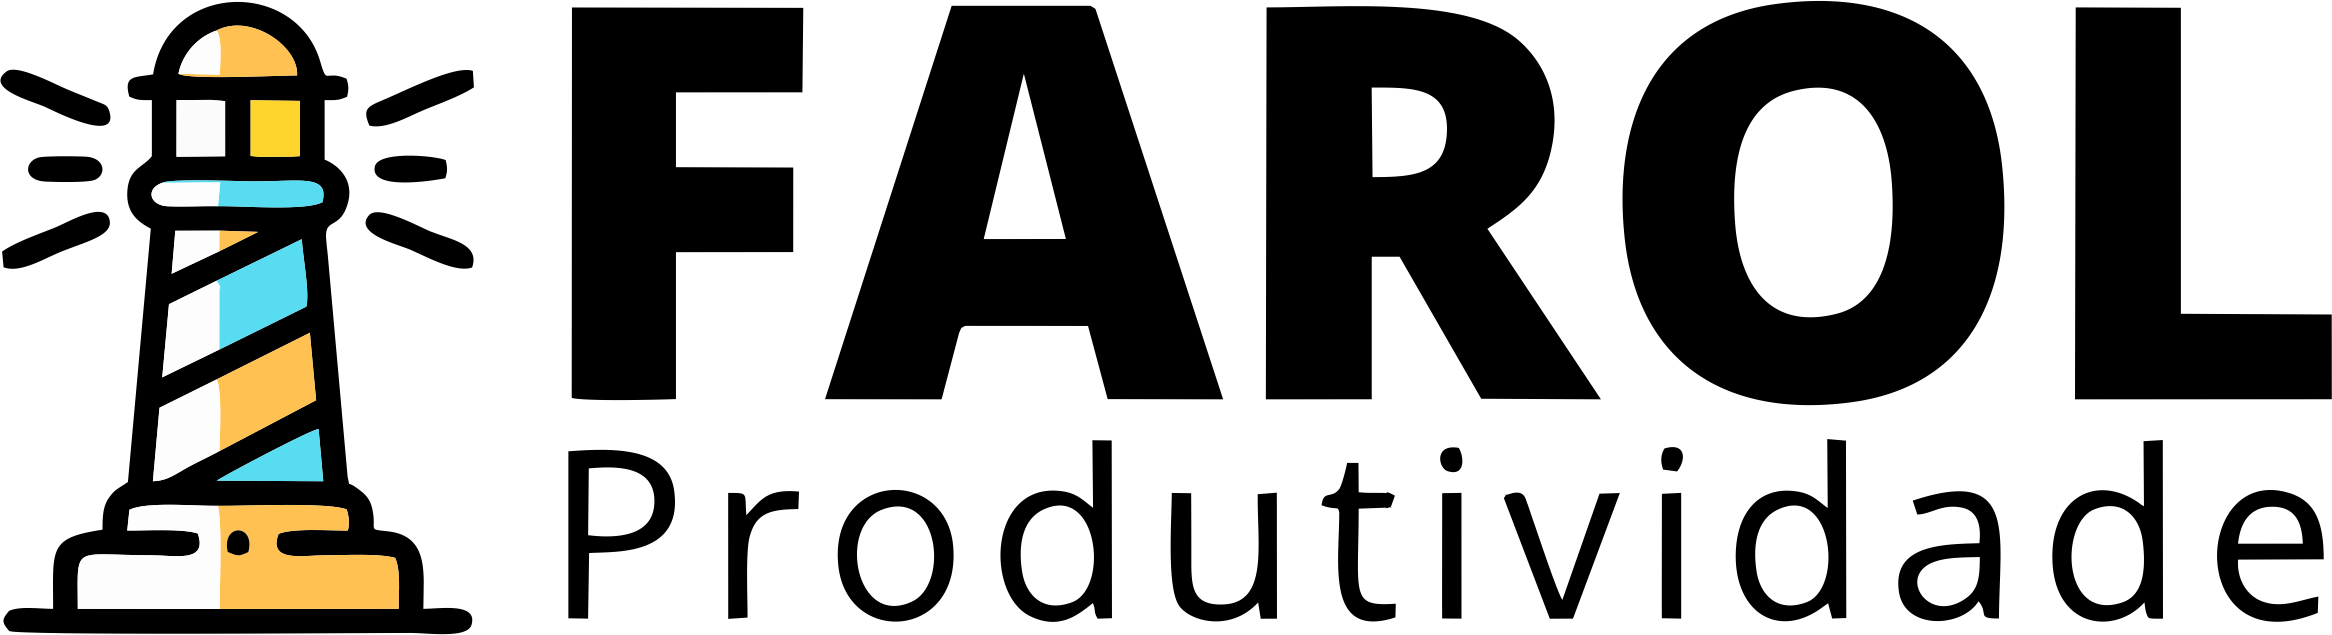 Logotipo Farol Produtividade